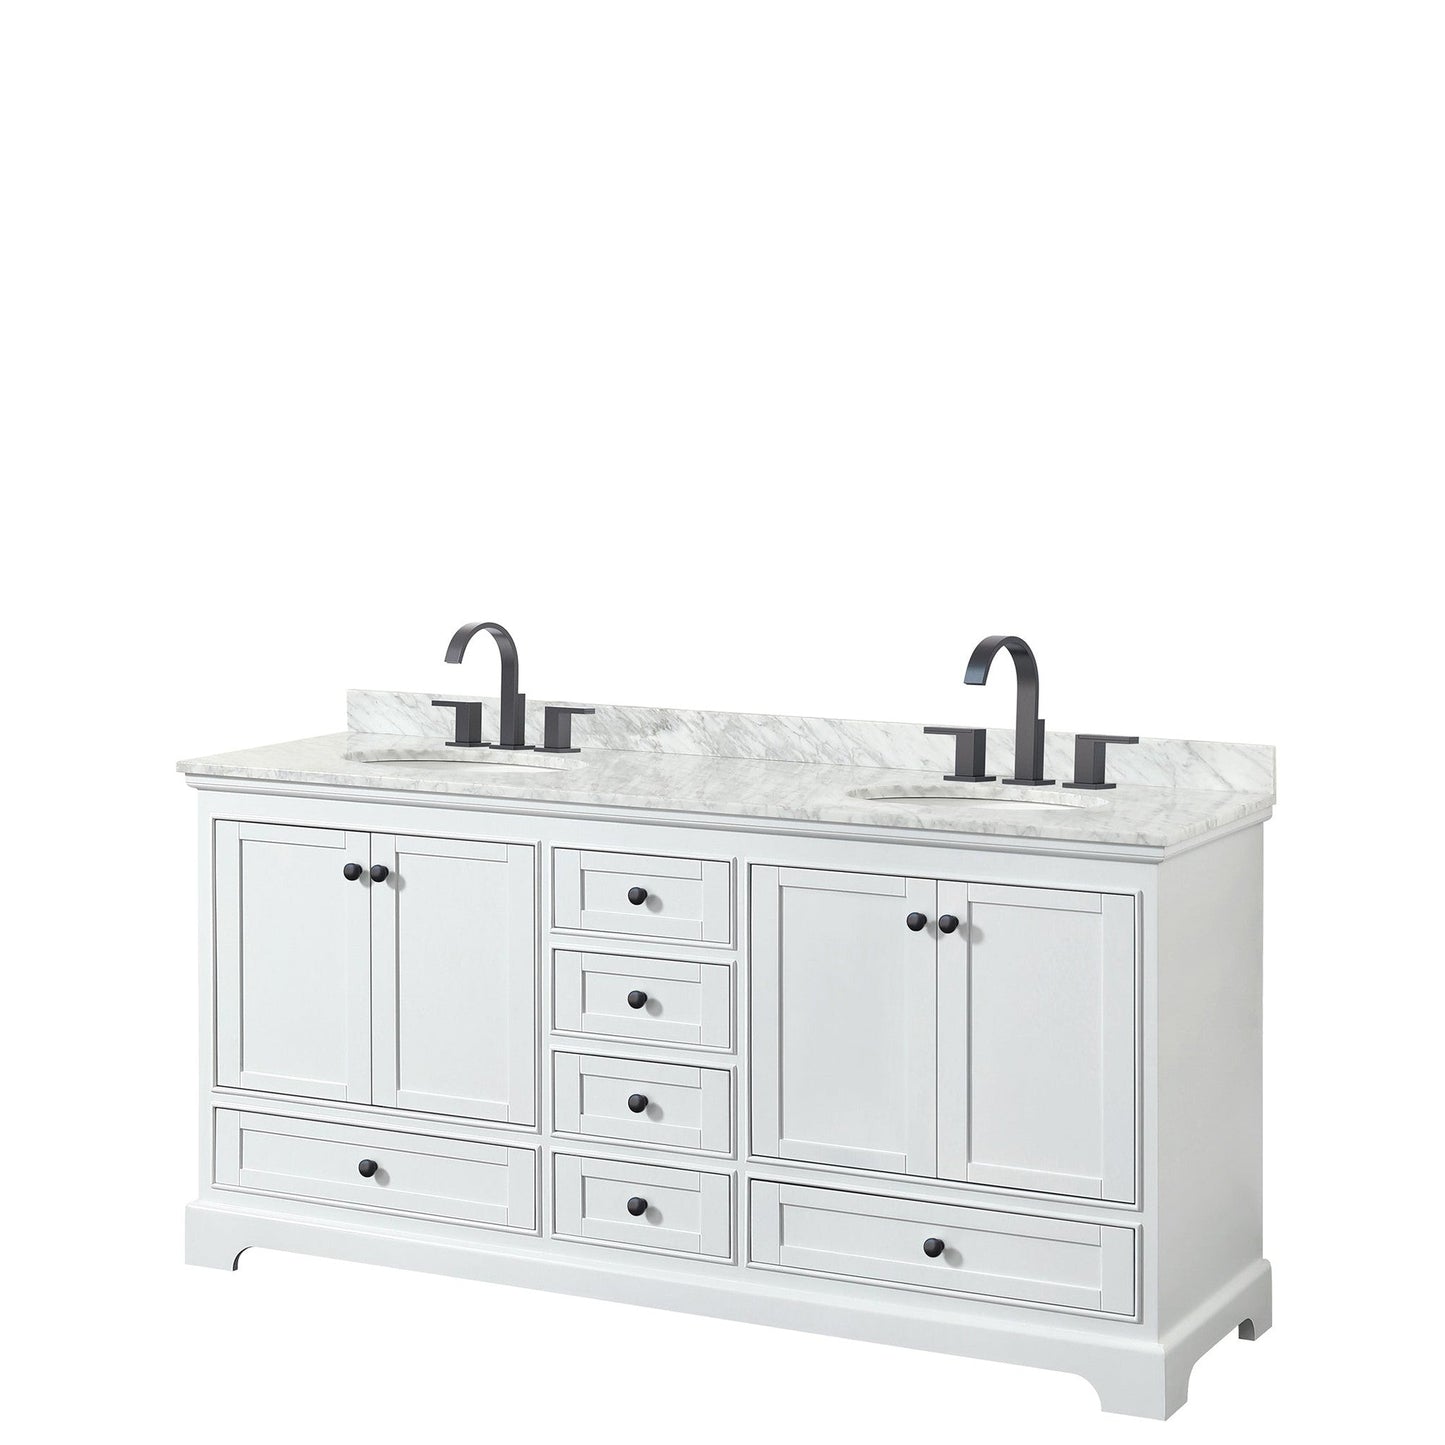 Deborah 72" Double Bathroom Vanity in White, White Carrara Marble Countertop, Undermount Oval Sinks, Matte Black Trim